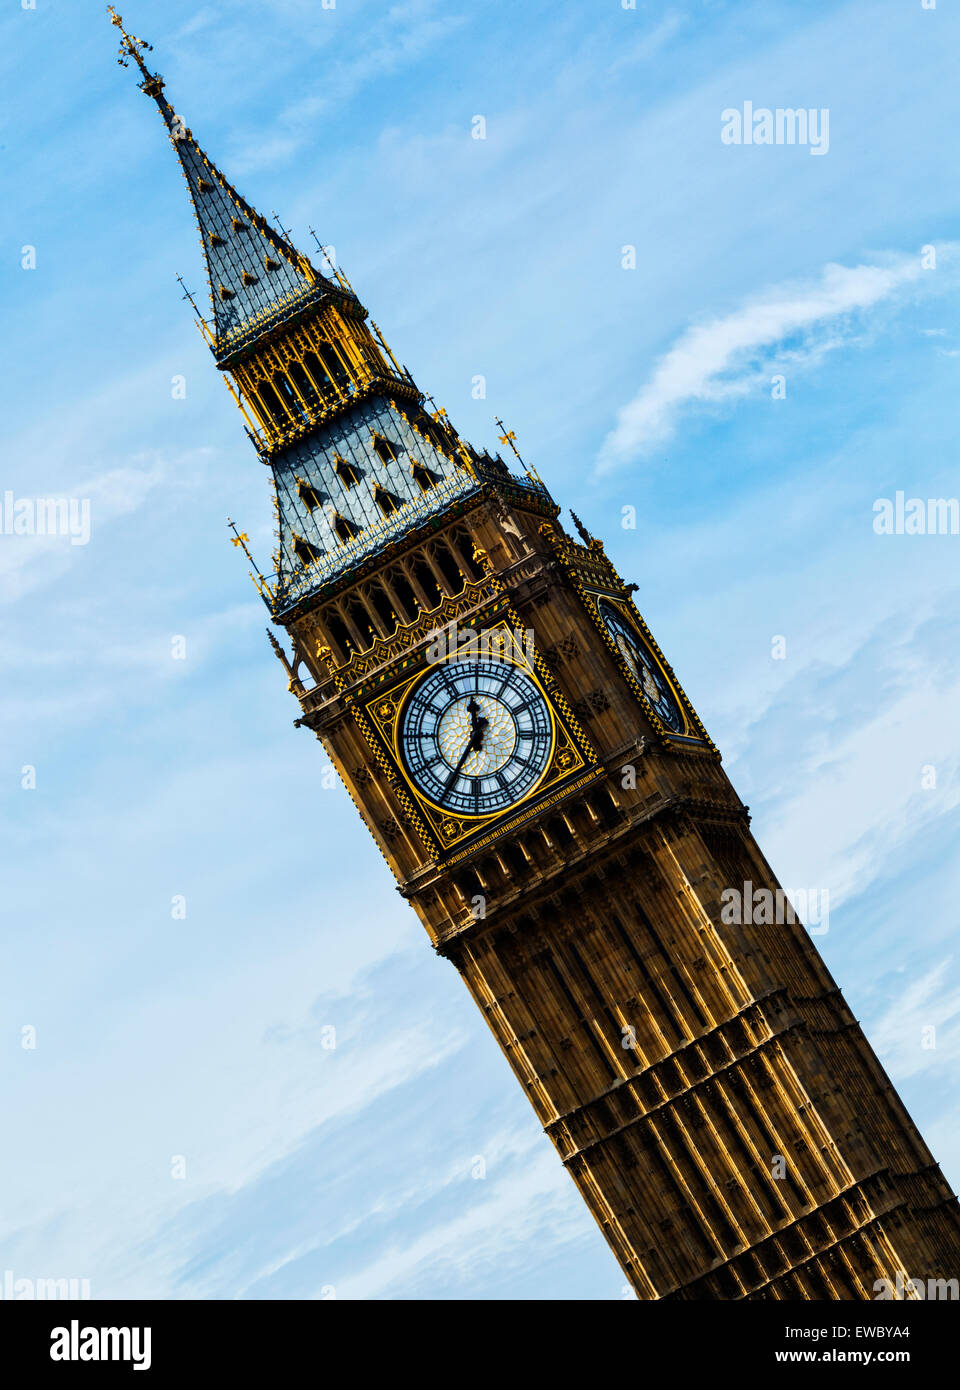 Elizabeth Tower known as Big Ben Clock Tower, London, UK. Stock Photo